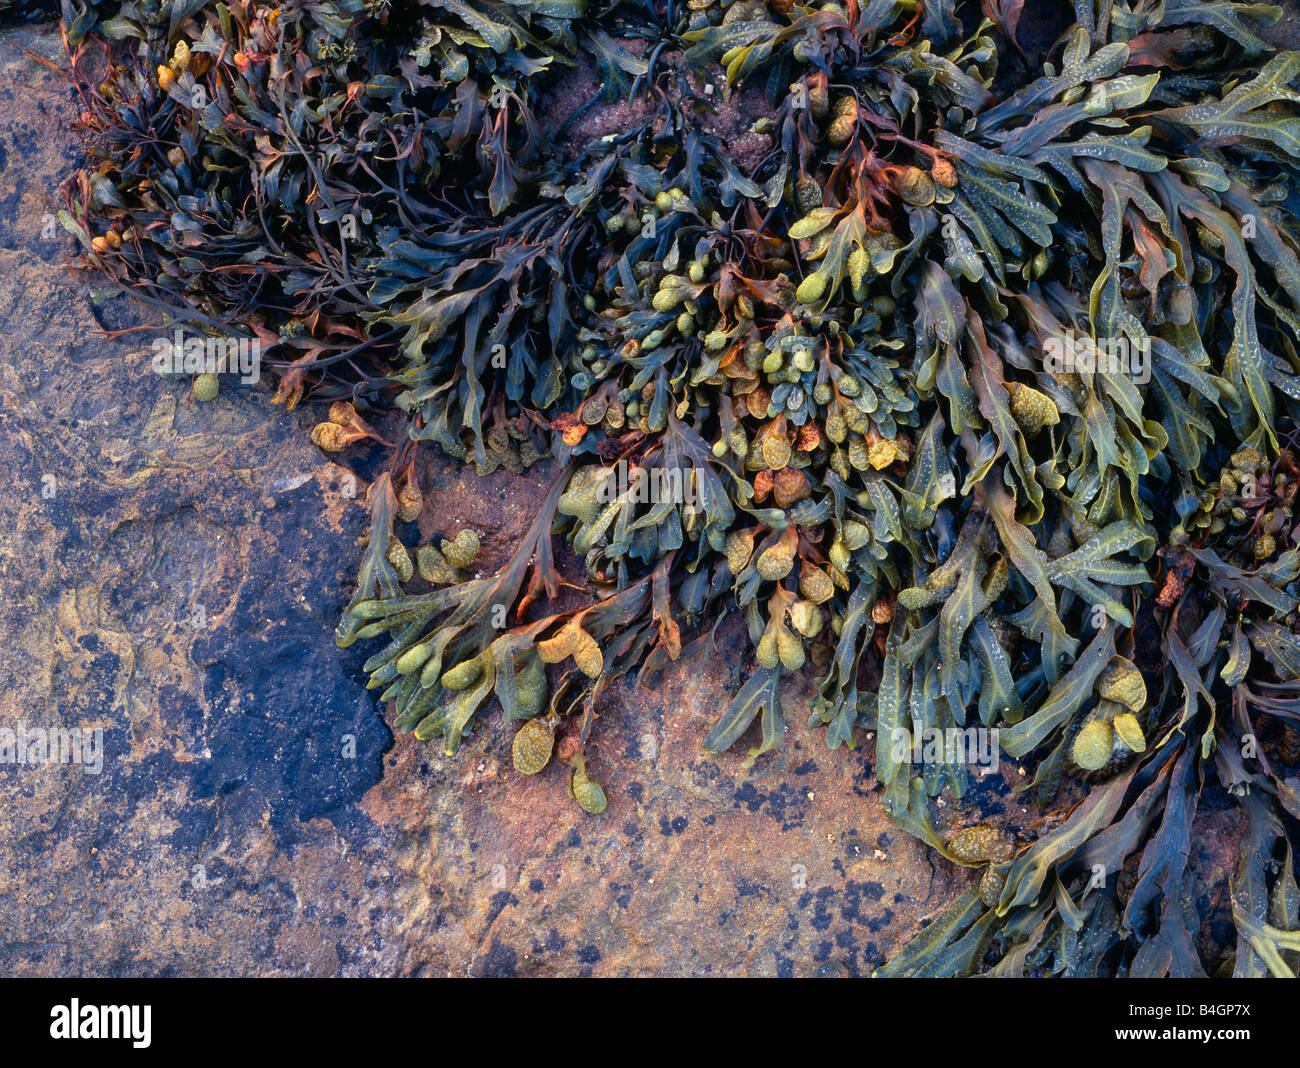 Beadnell, Northumberland, UK. Colourful seaweed on rocks. Stock Photo